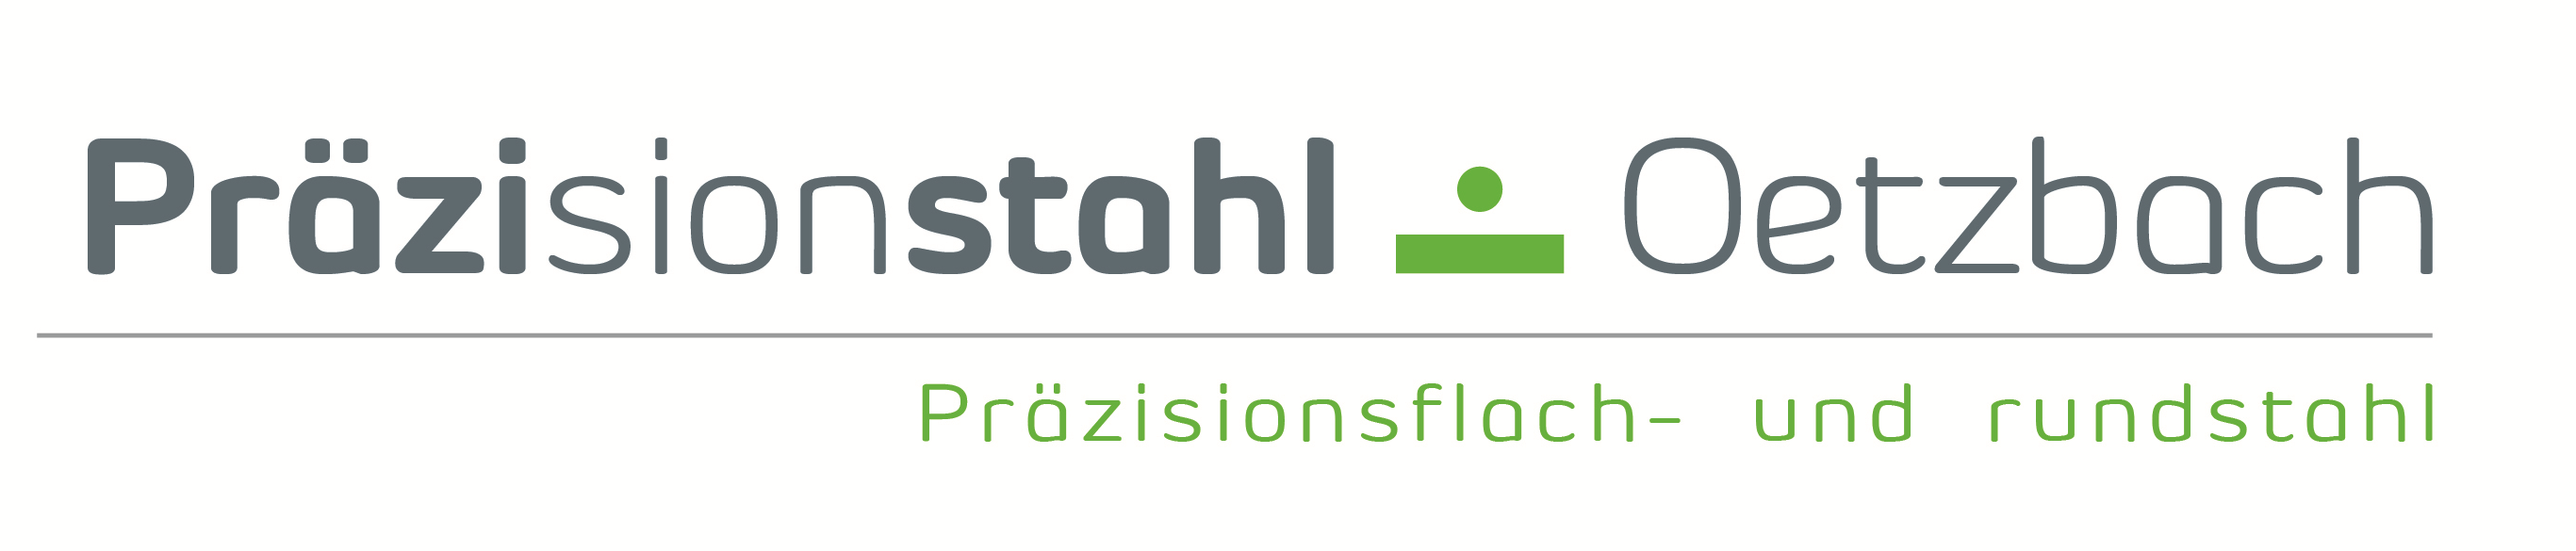 Przisionstahl Oetzbach GmbH